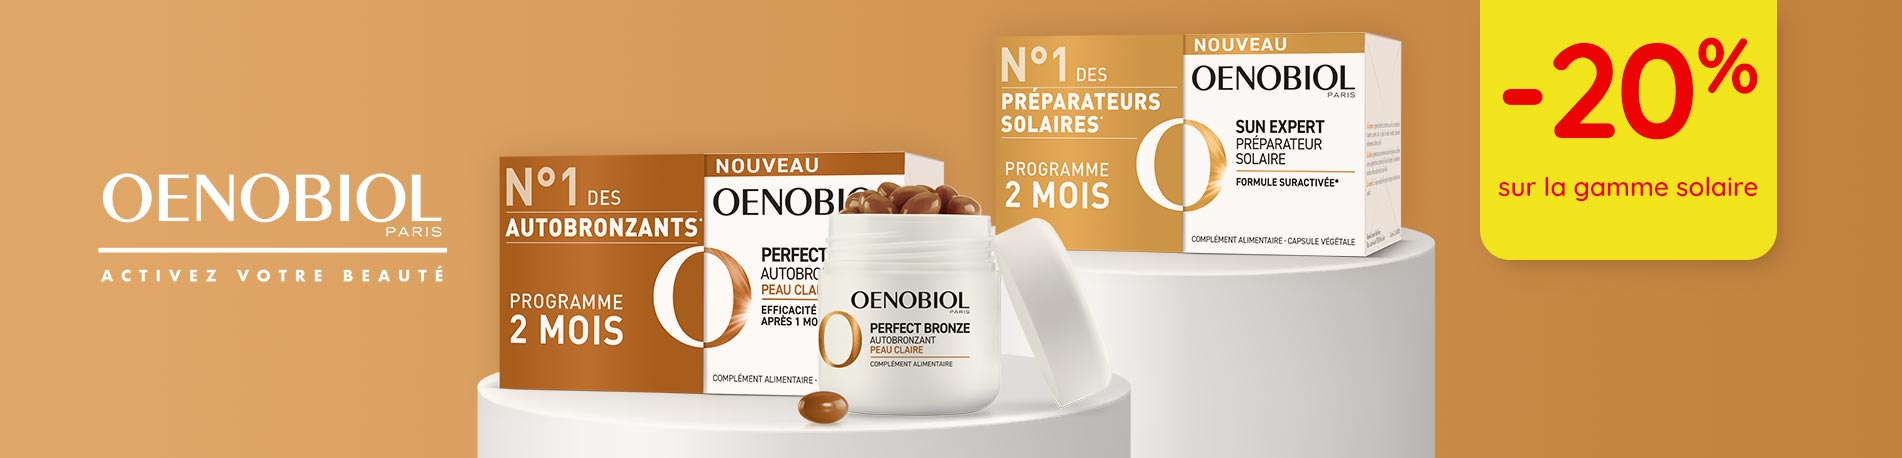 Promotion Oenobiol